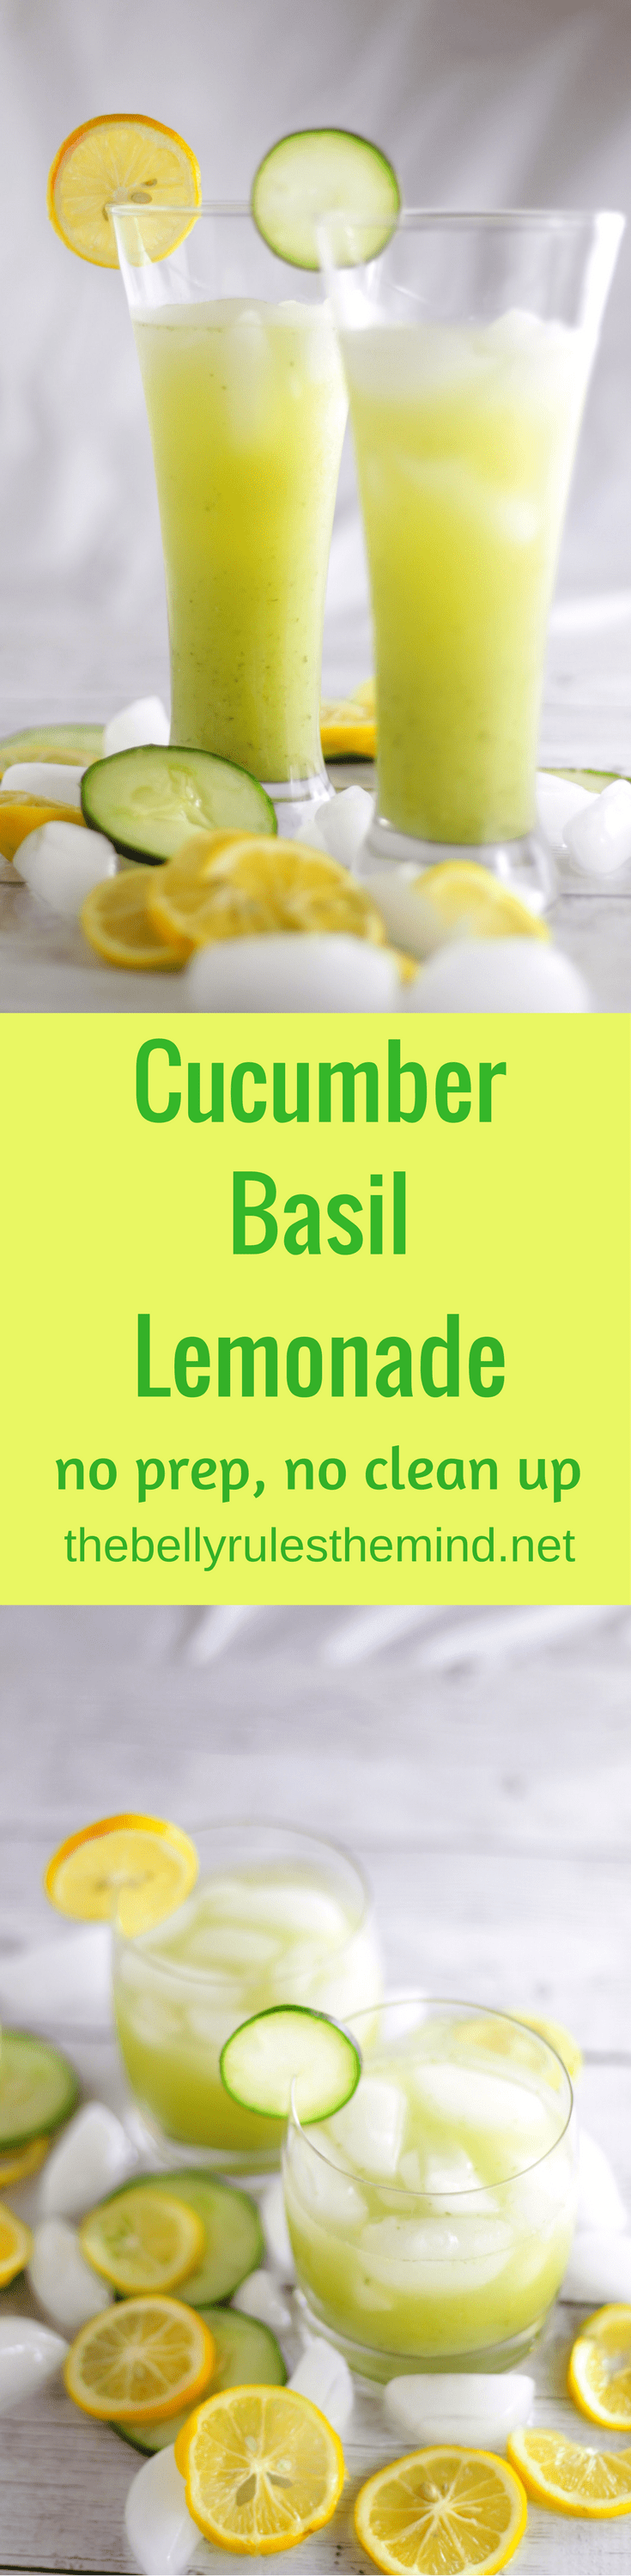 Cucumber Basil Lemonade using Dorot